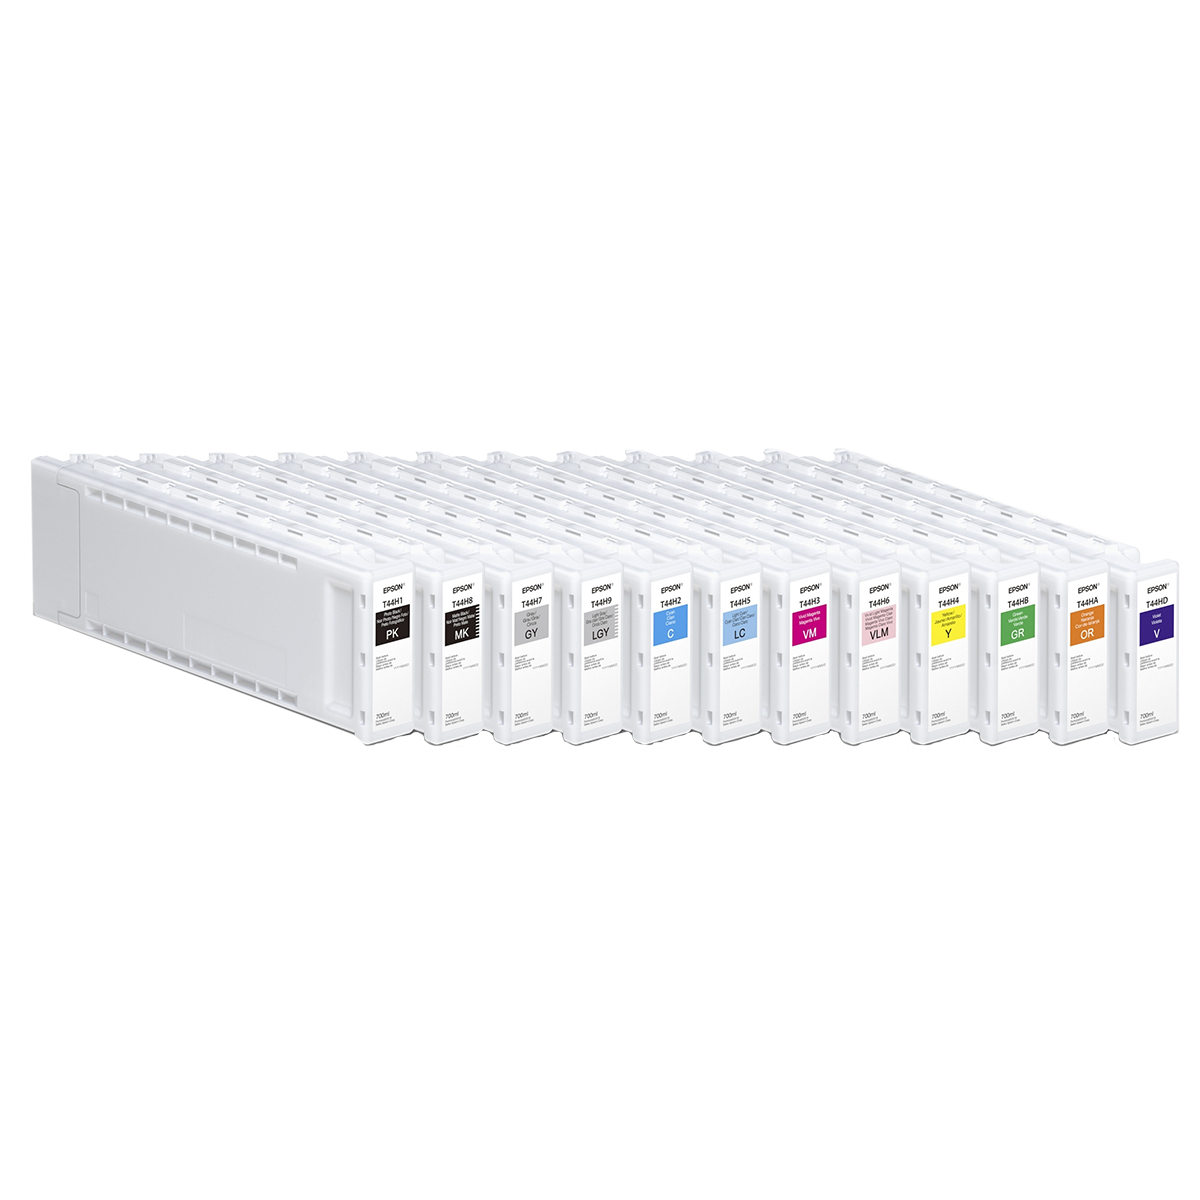 Epson UltraChrome Pro 12 350ml Ink Cartridges - for 7570 & 9570, Color: Photo Black